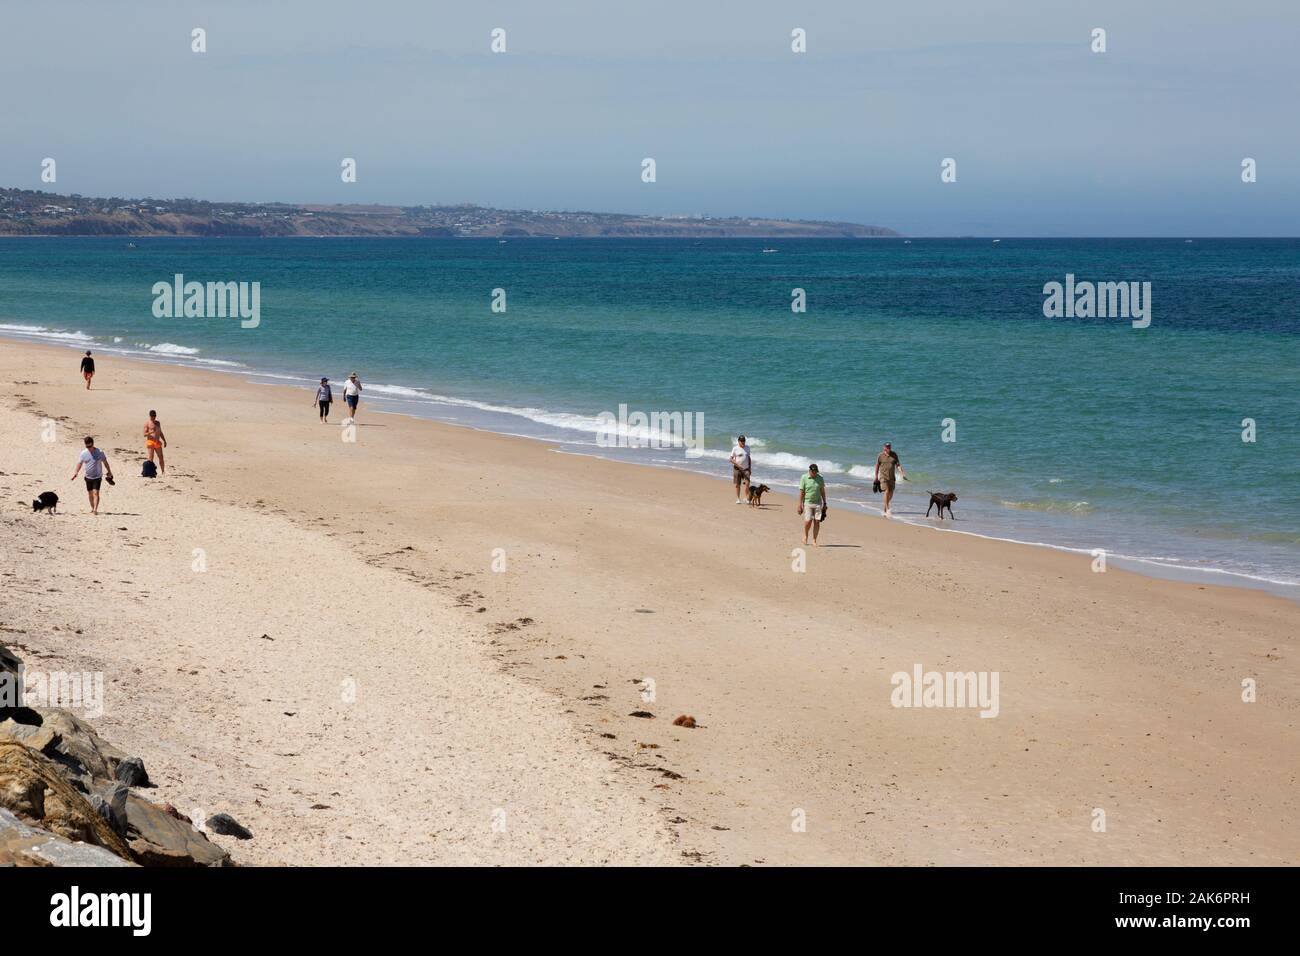 Adelaide beach - people on Glenelg beach, Adelaide Australia on a sunny day in spring, Adelaide South Australia Stock Photo